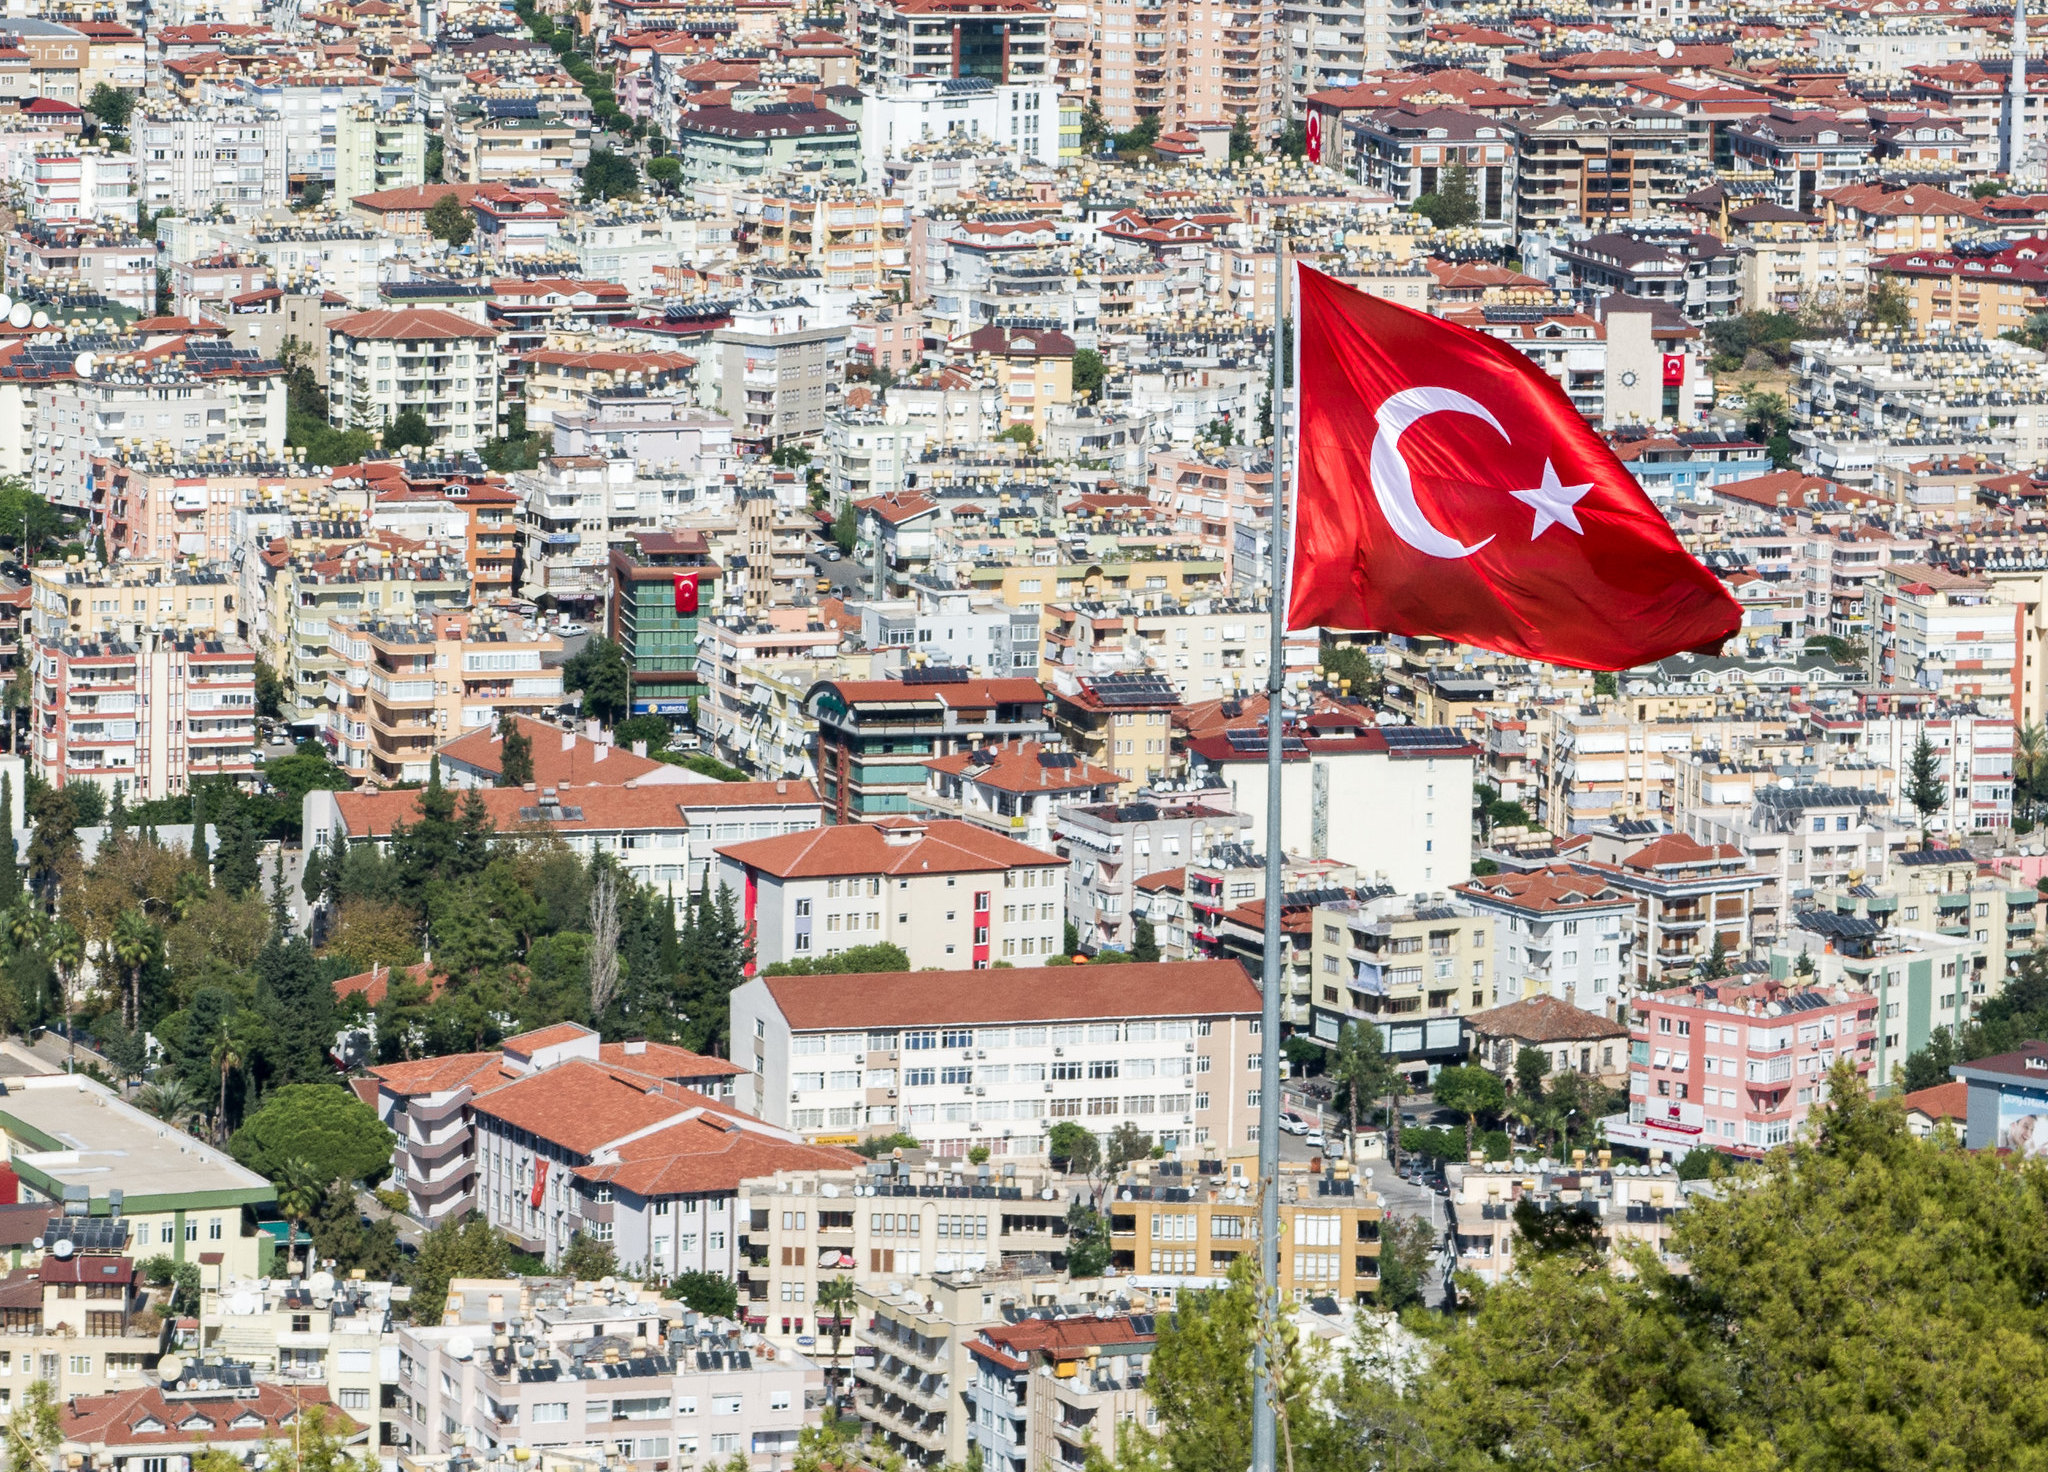 The flag of Turkey. (Photo by nafrenkel88 via Flickr / CC BY 2.0)